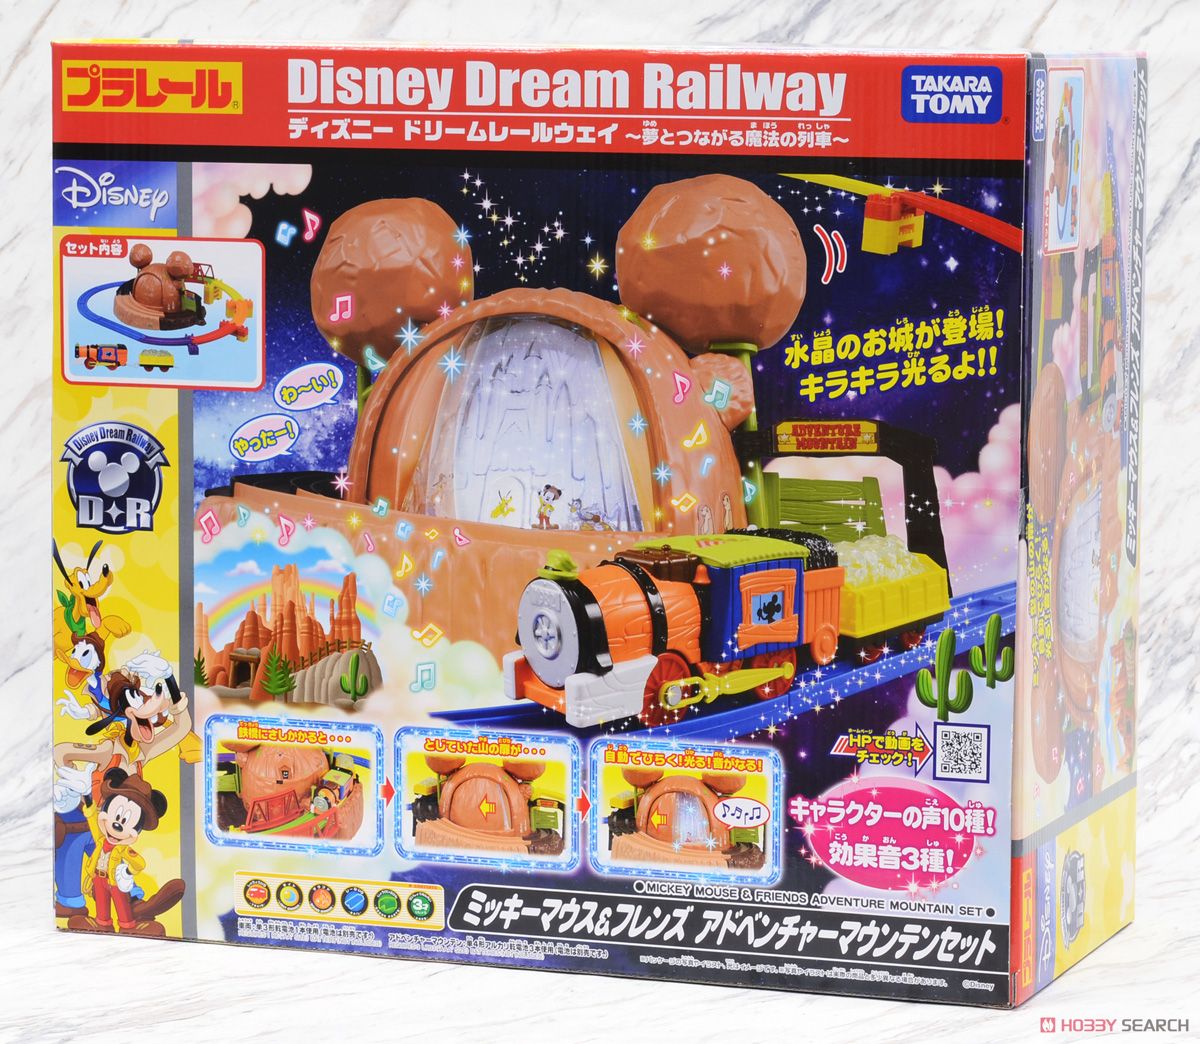 Disney Dream Railway Mickey Mouse & Friends Adventure Mountain Set (Plarail) Package1